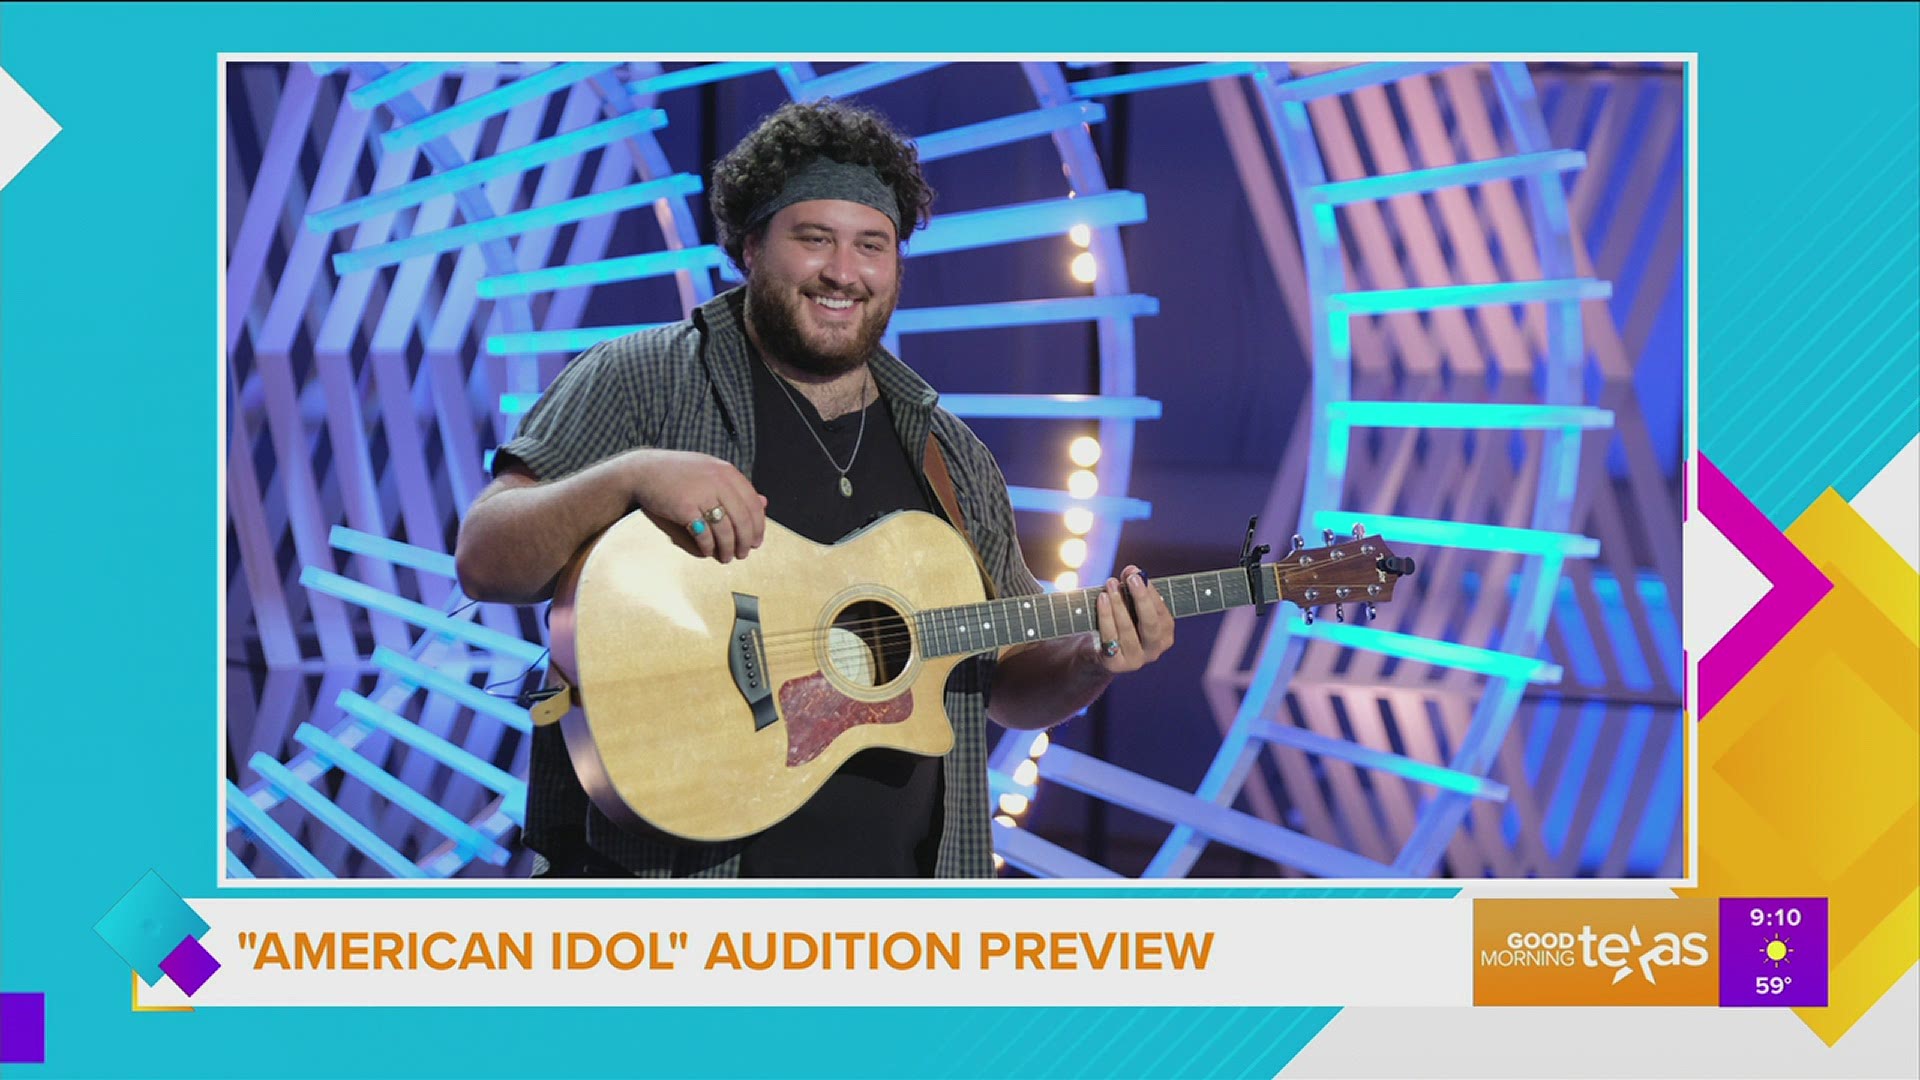 See Graham DeFranco's "American Idol" audition Sunday, February 28